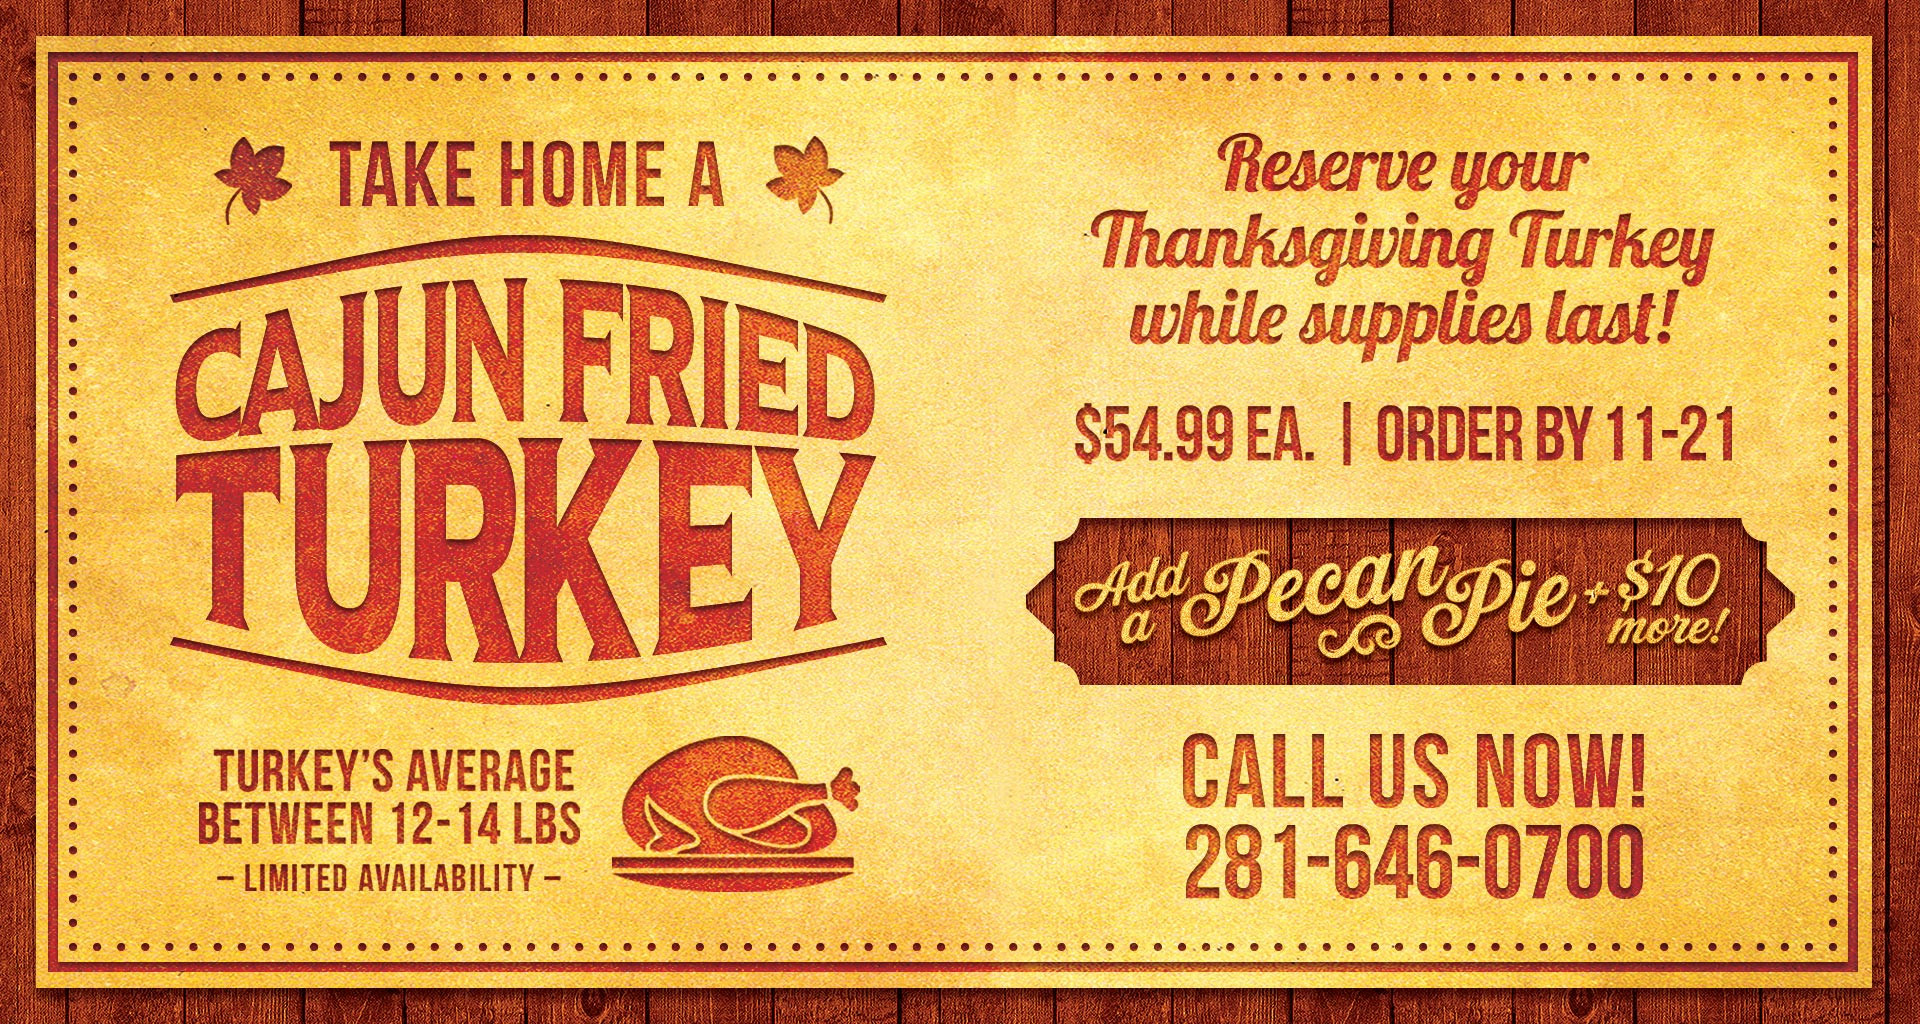 Thanksgiving Turkey Order
 Take Home a Cajun Fried Turkey Orleans Seafood Kitchen